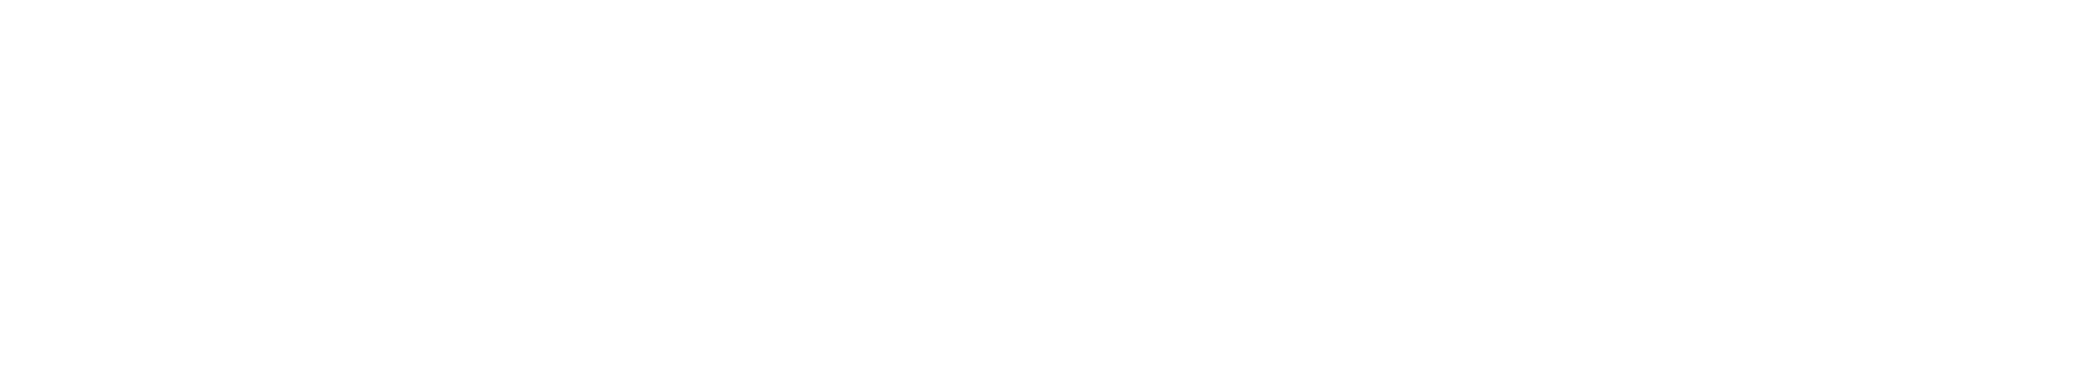 Lining Division logo